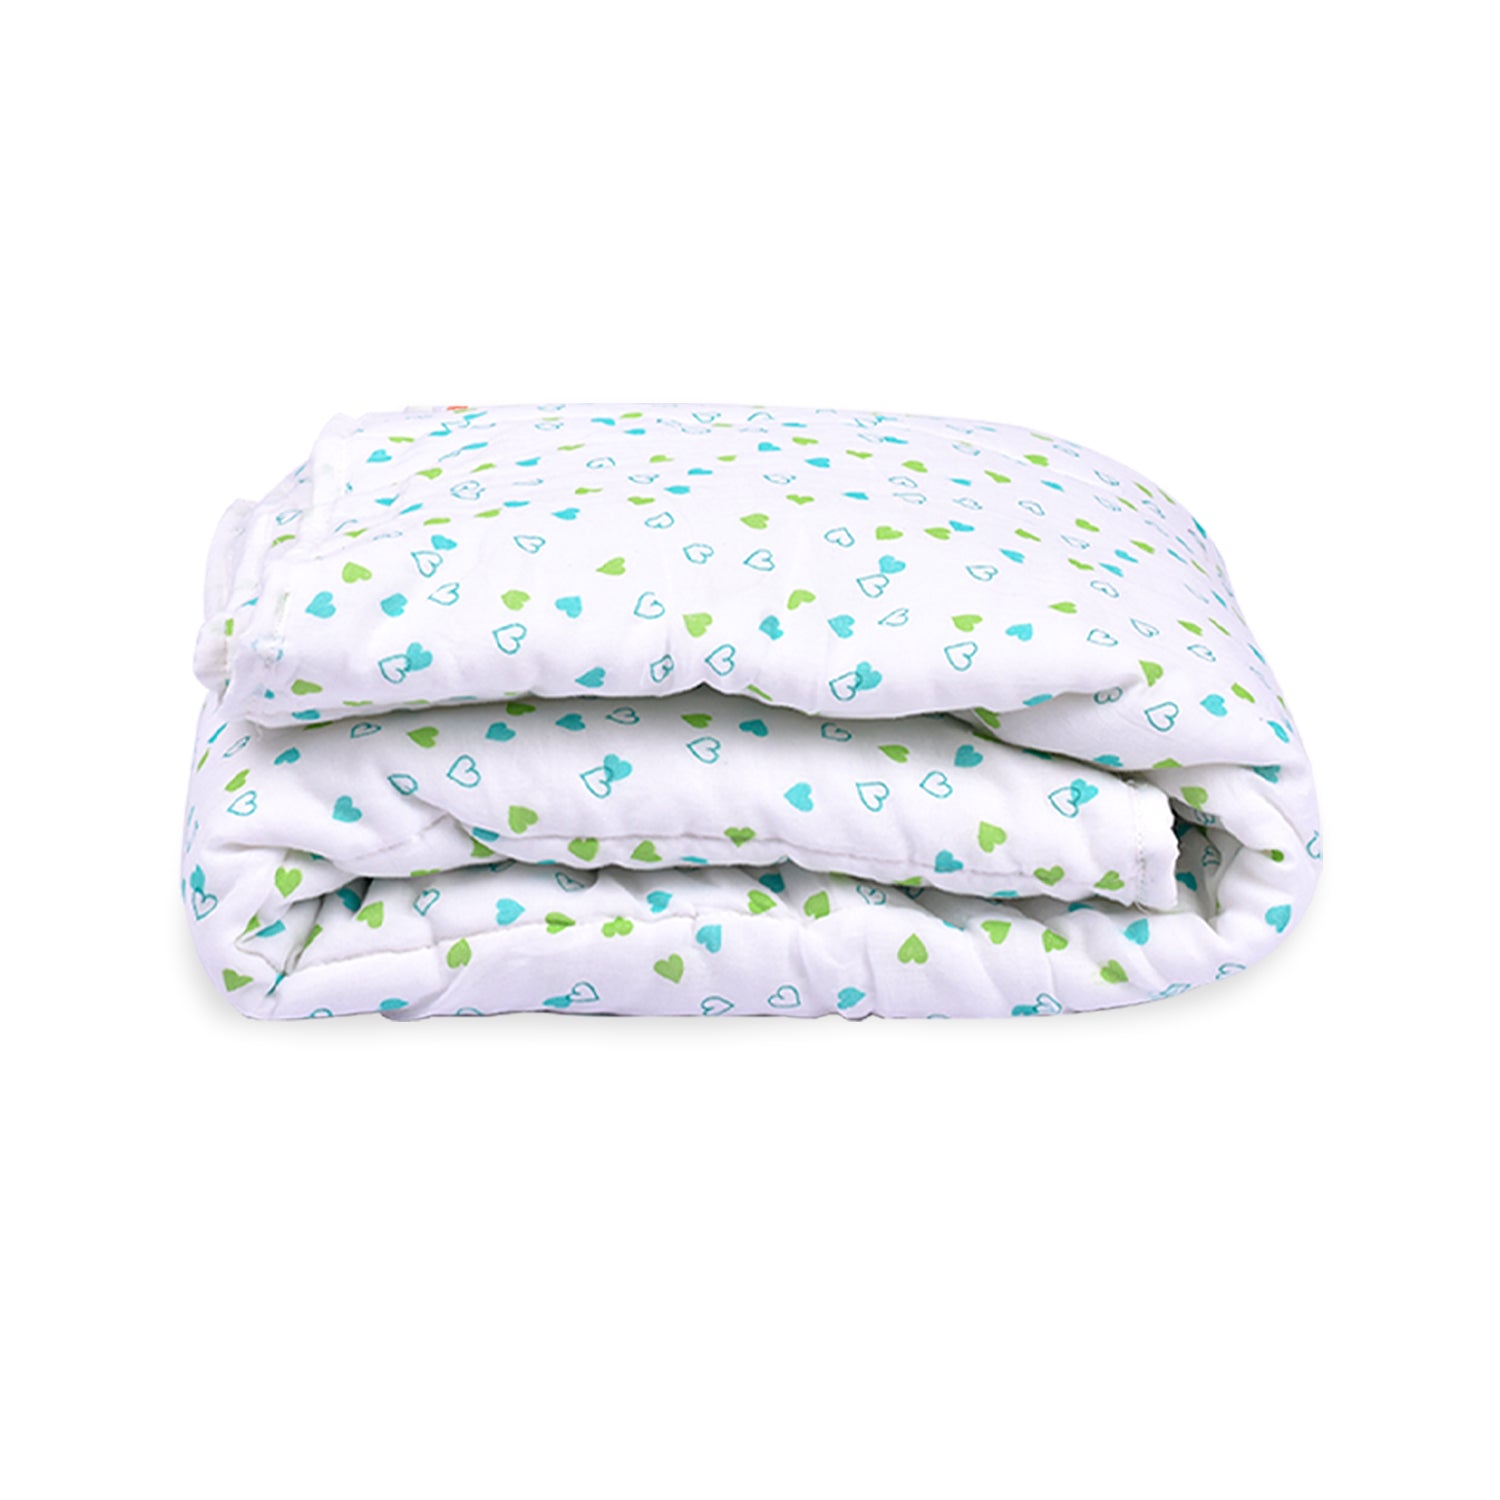 Baby Ac Quilt Blanket cum Bedspread- 0-3 Years - 100*120 cm - Green Heart